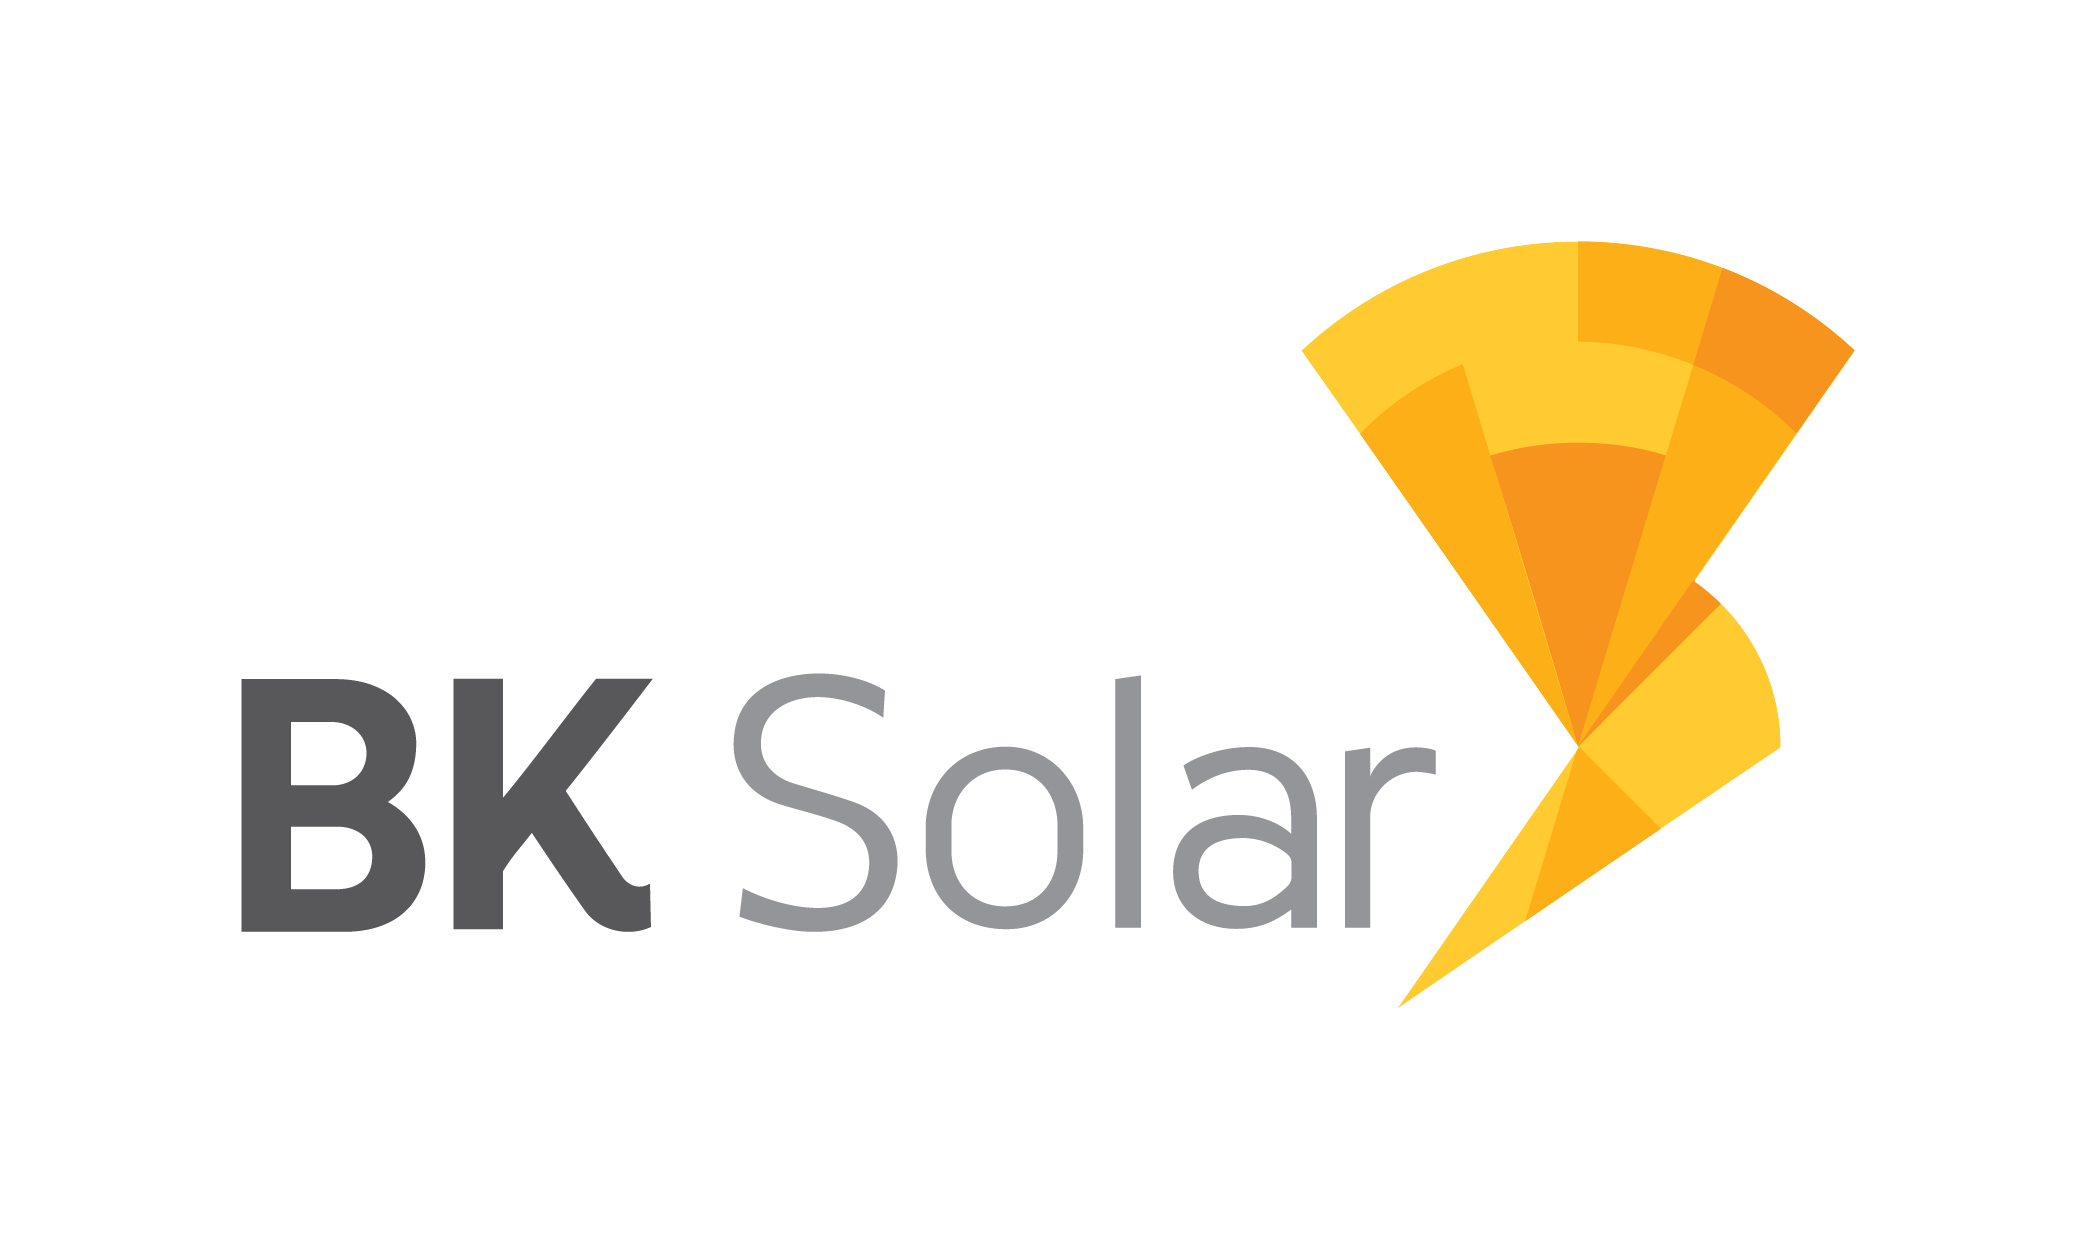 BK Solar